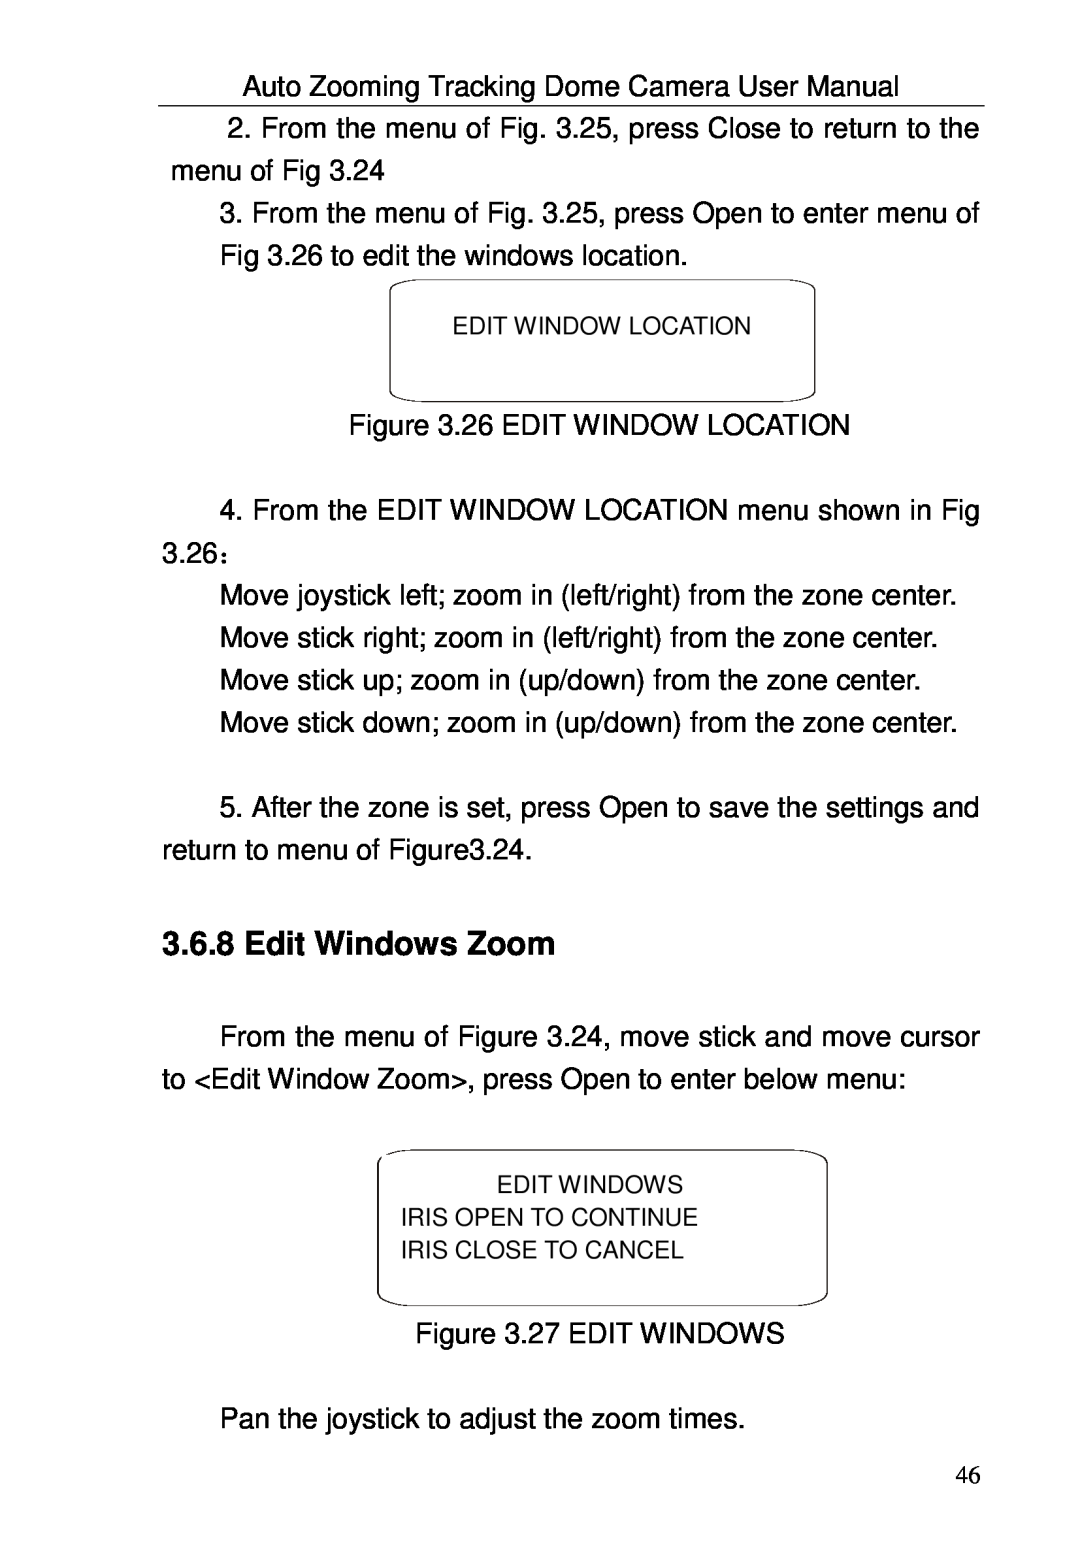 Optiview TRKPTZ -26NX Edit Windows Zoom, Edit Window Location, Edit Windows Iris Open To Continue Iris Close To Cancel 